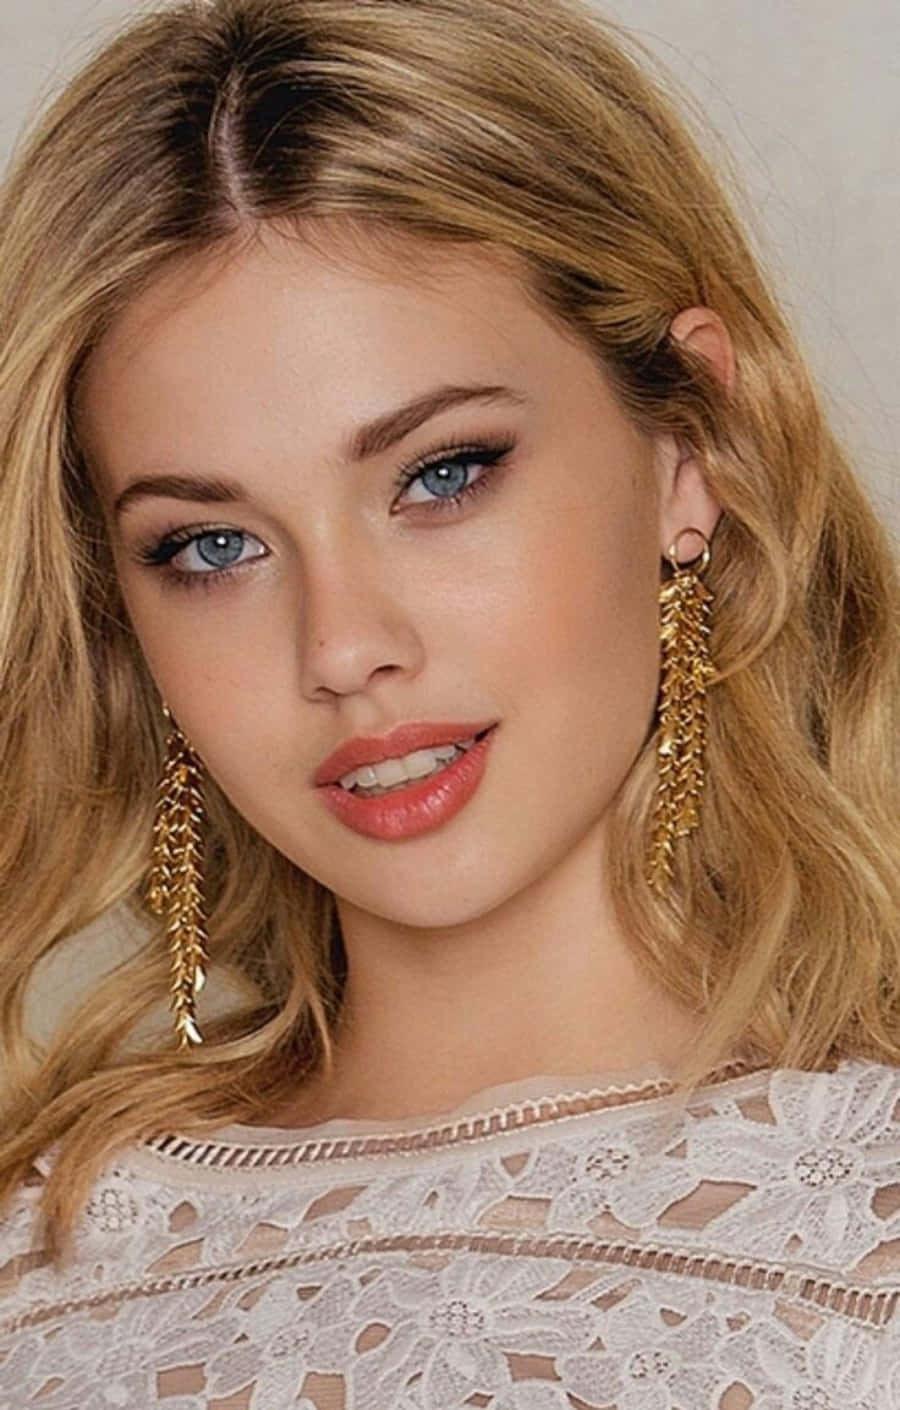 Female Gold Drop Earrings Picture